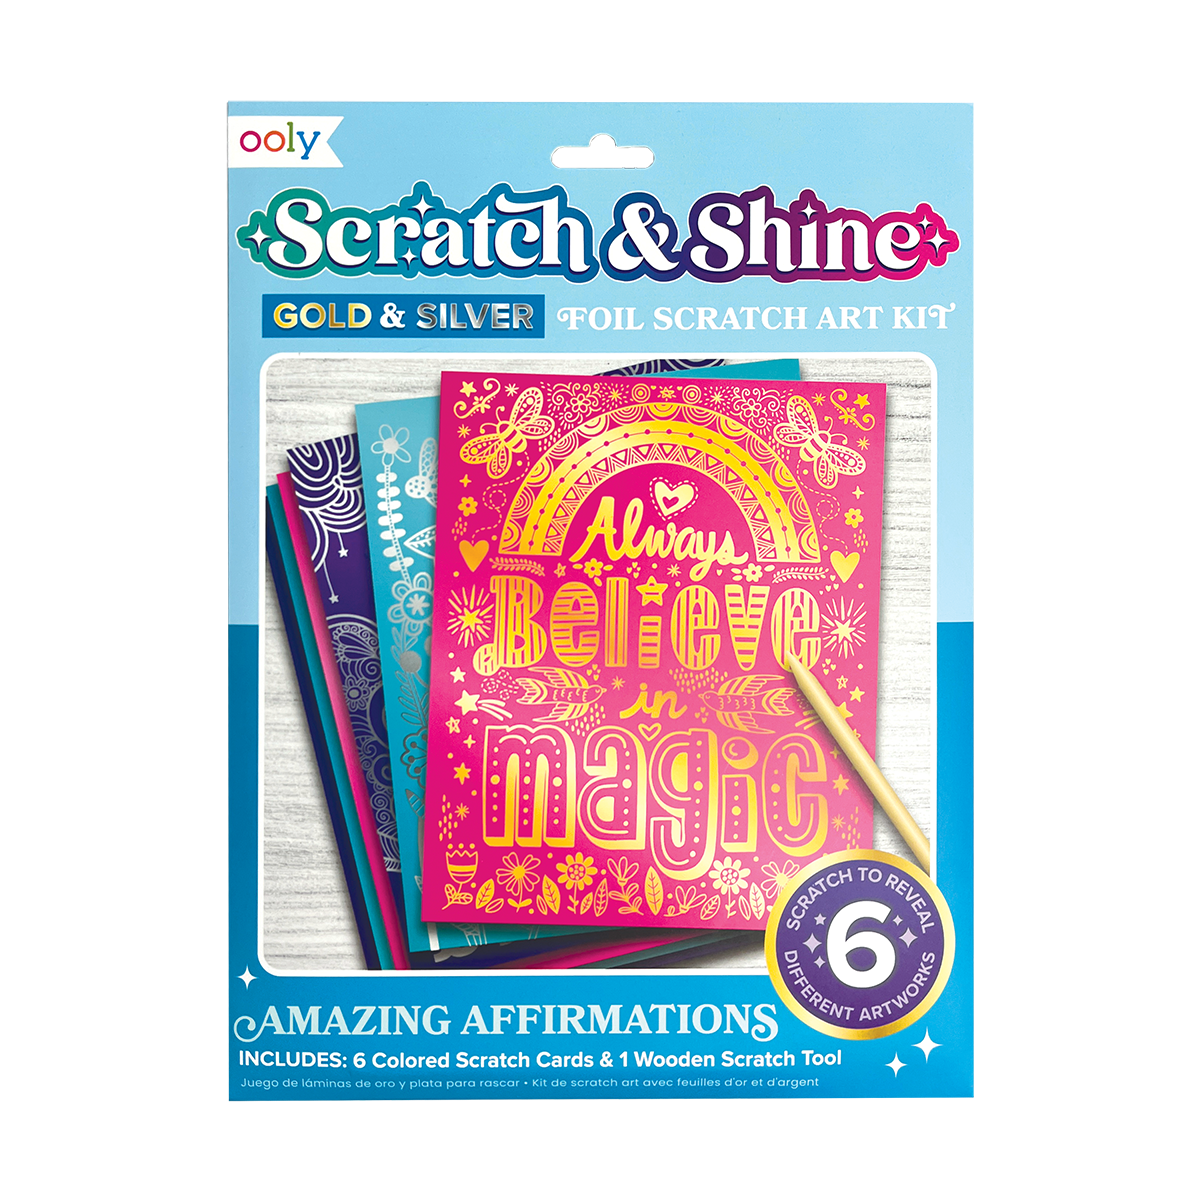 Ooly Scratch & Shine Foil Scratch Art Kit - Amazing Affirmations